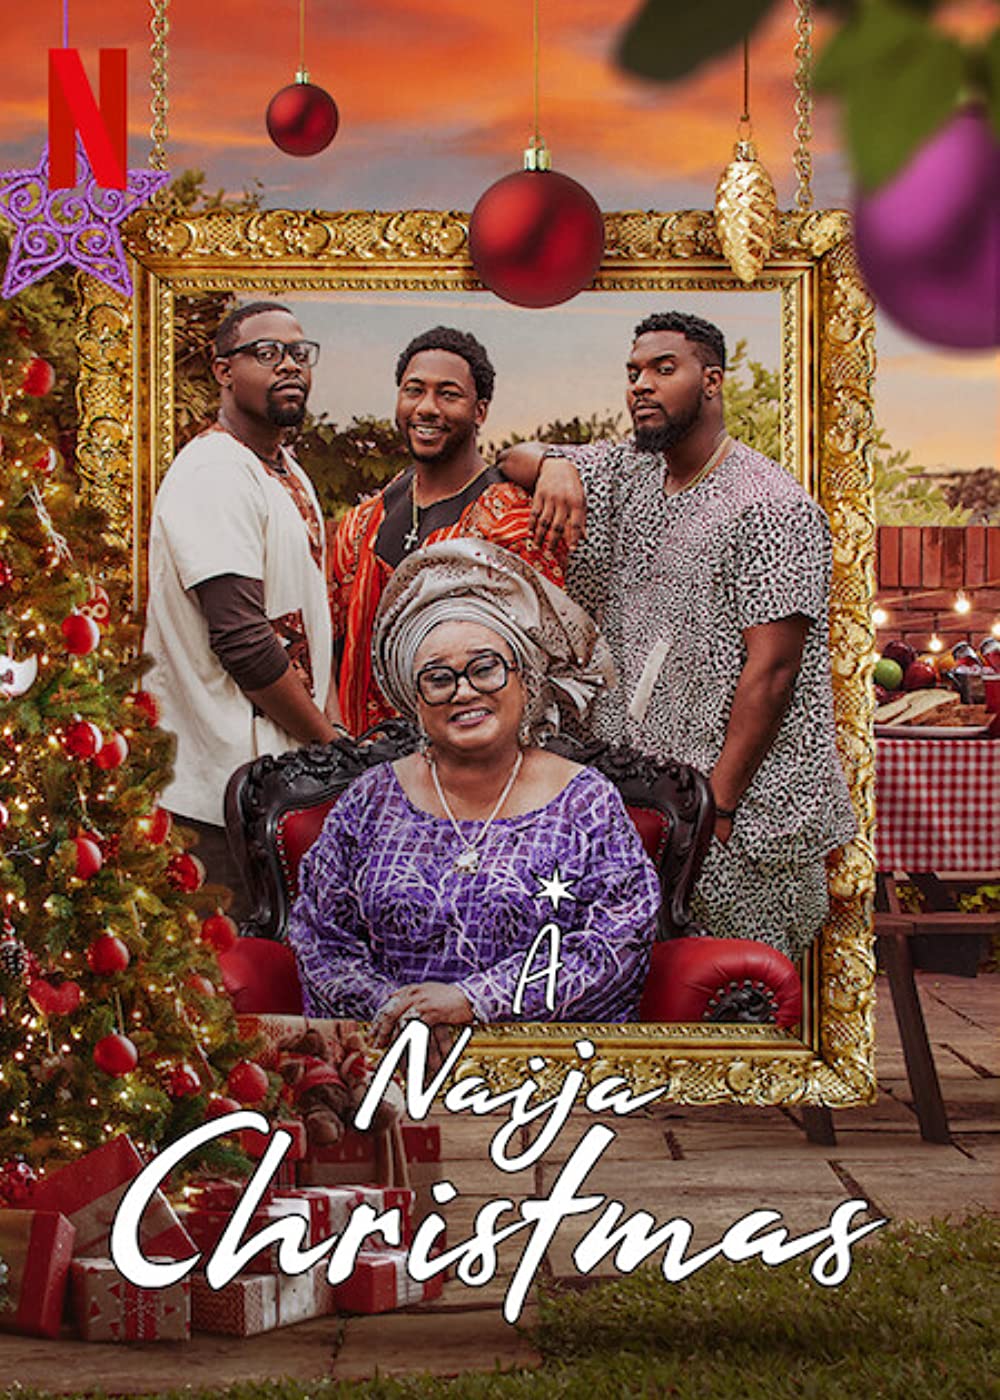 Filmbeschreibung zu A Naija Christmas